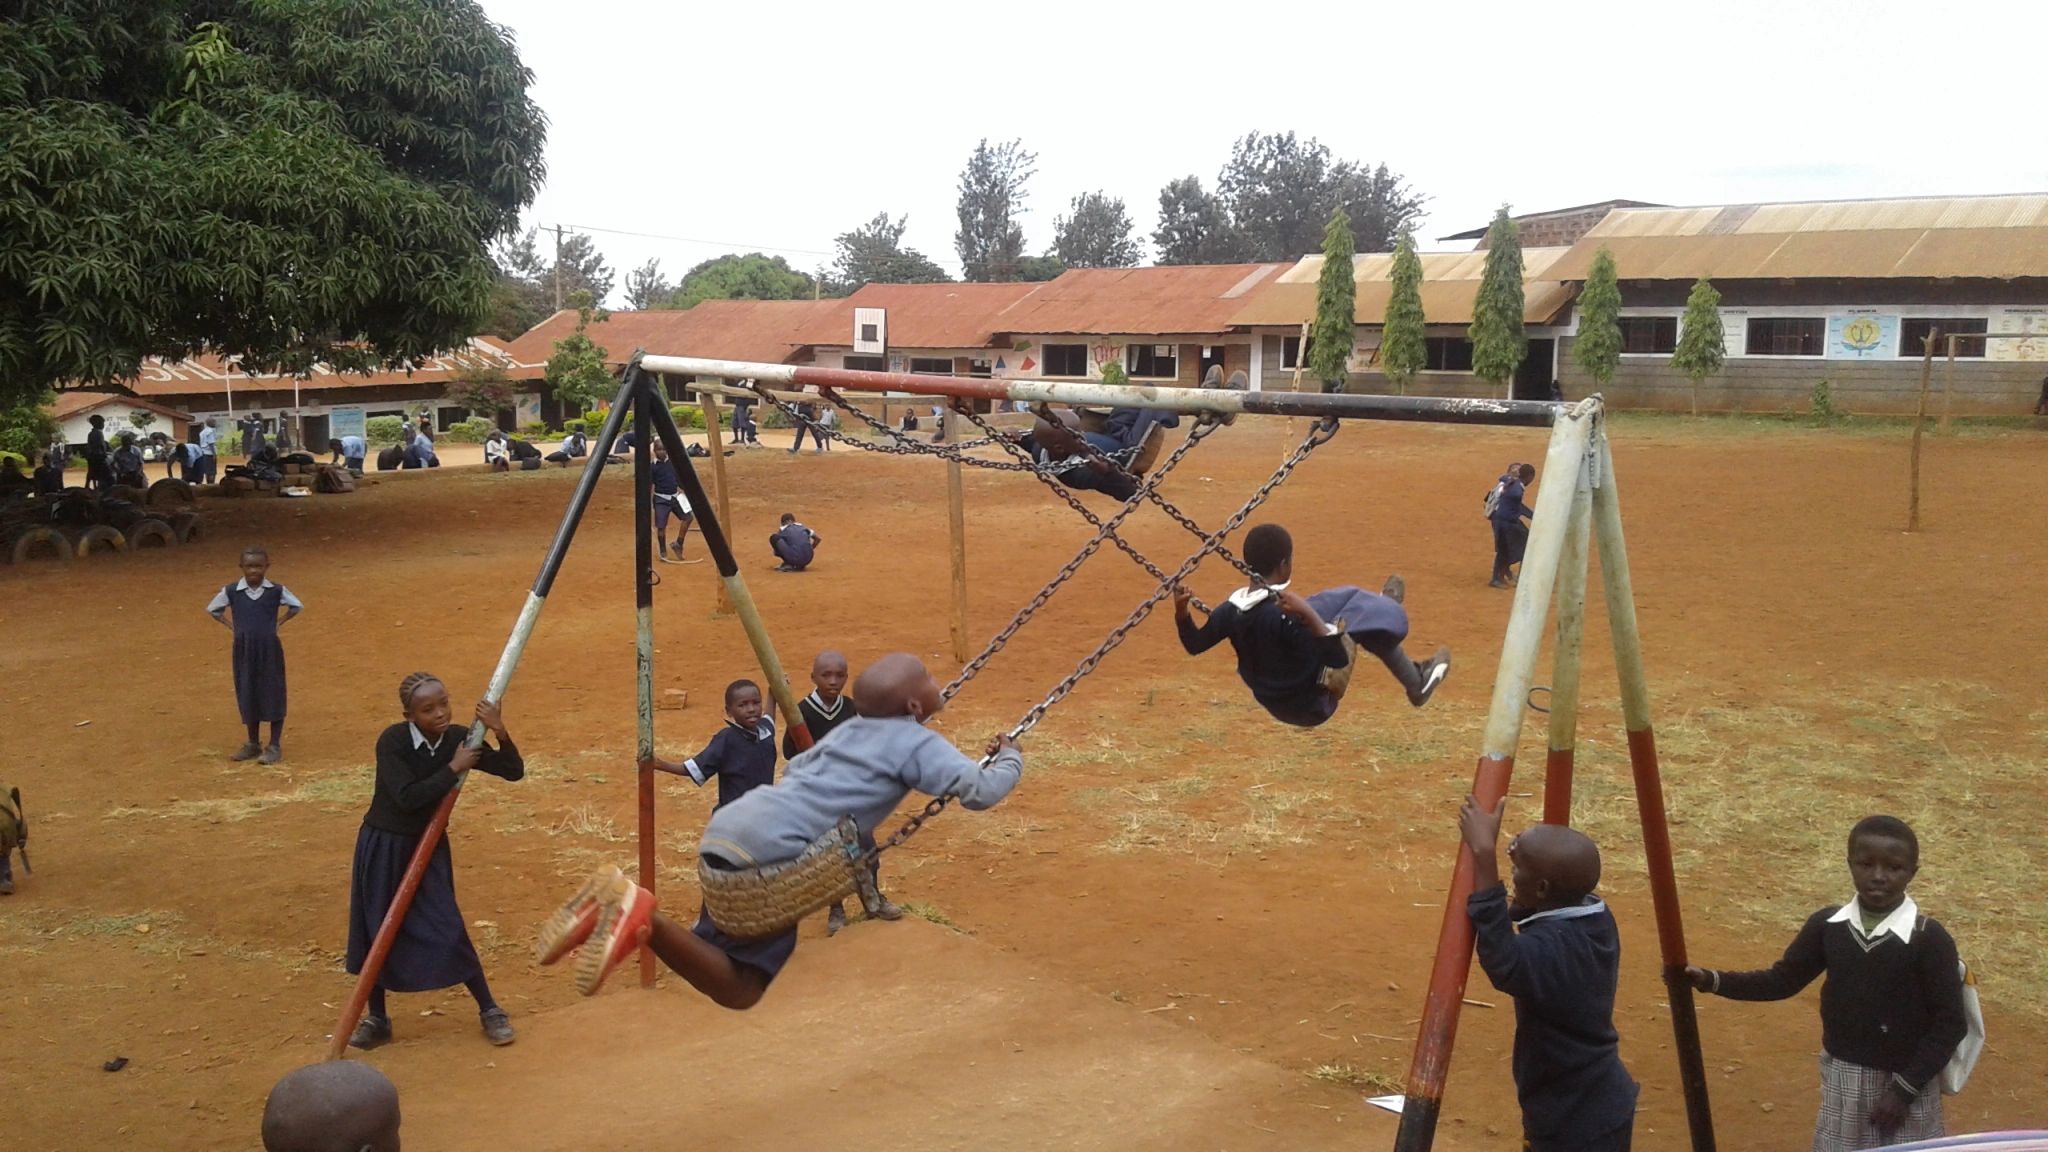 Chera Mission School, Kenya. Primary school aged children at play on swings in the school yard.